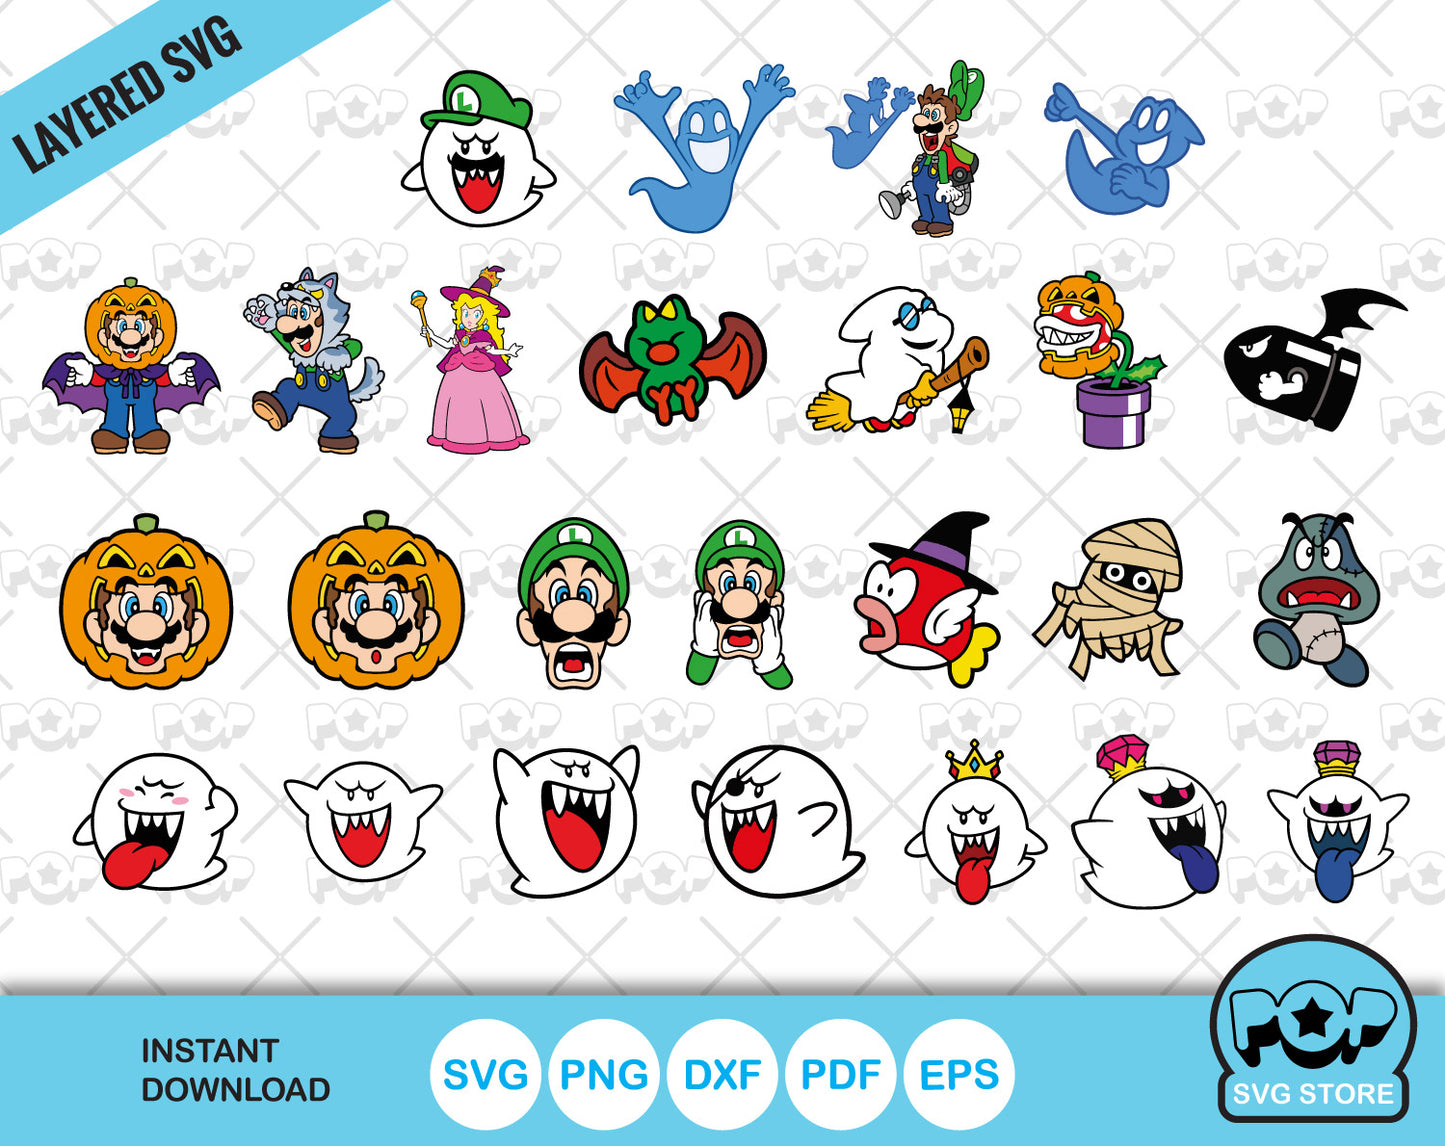 Super Mario Halloween clipart bundle, SVG cut files for Cricut / Silhouette, Halloween cliparts,, instant download